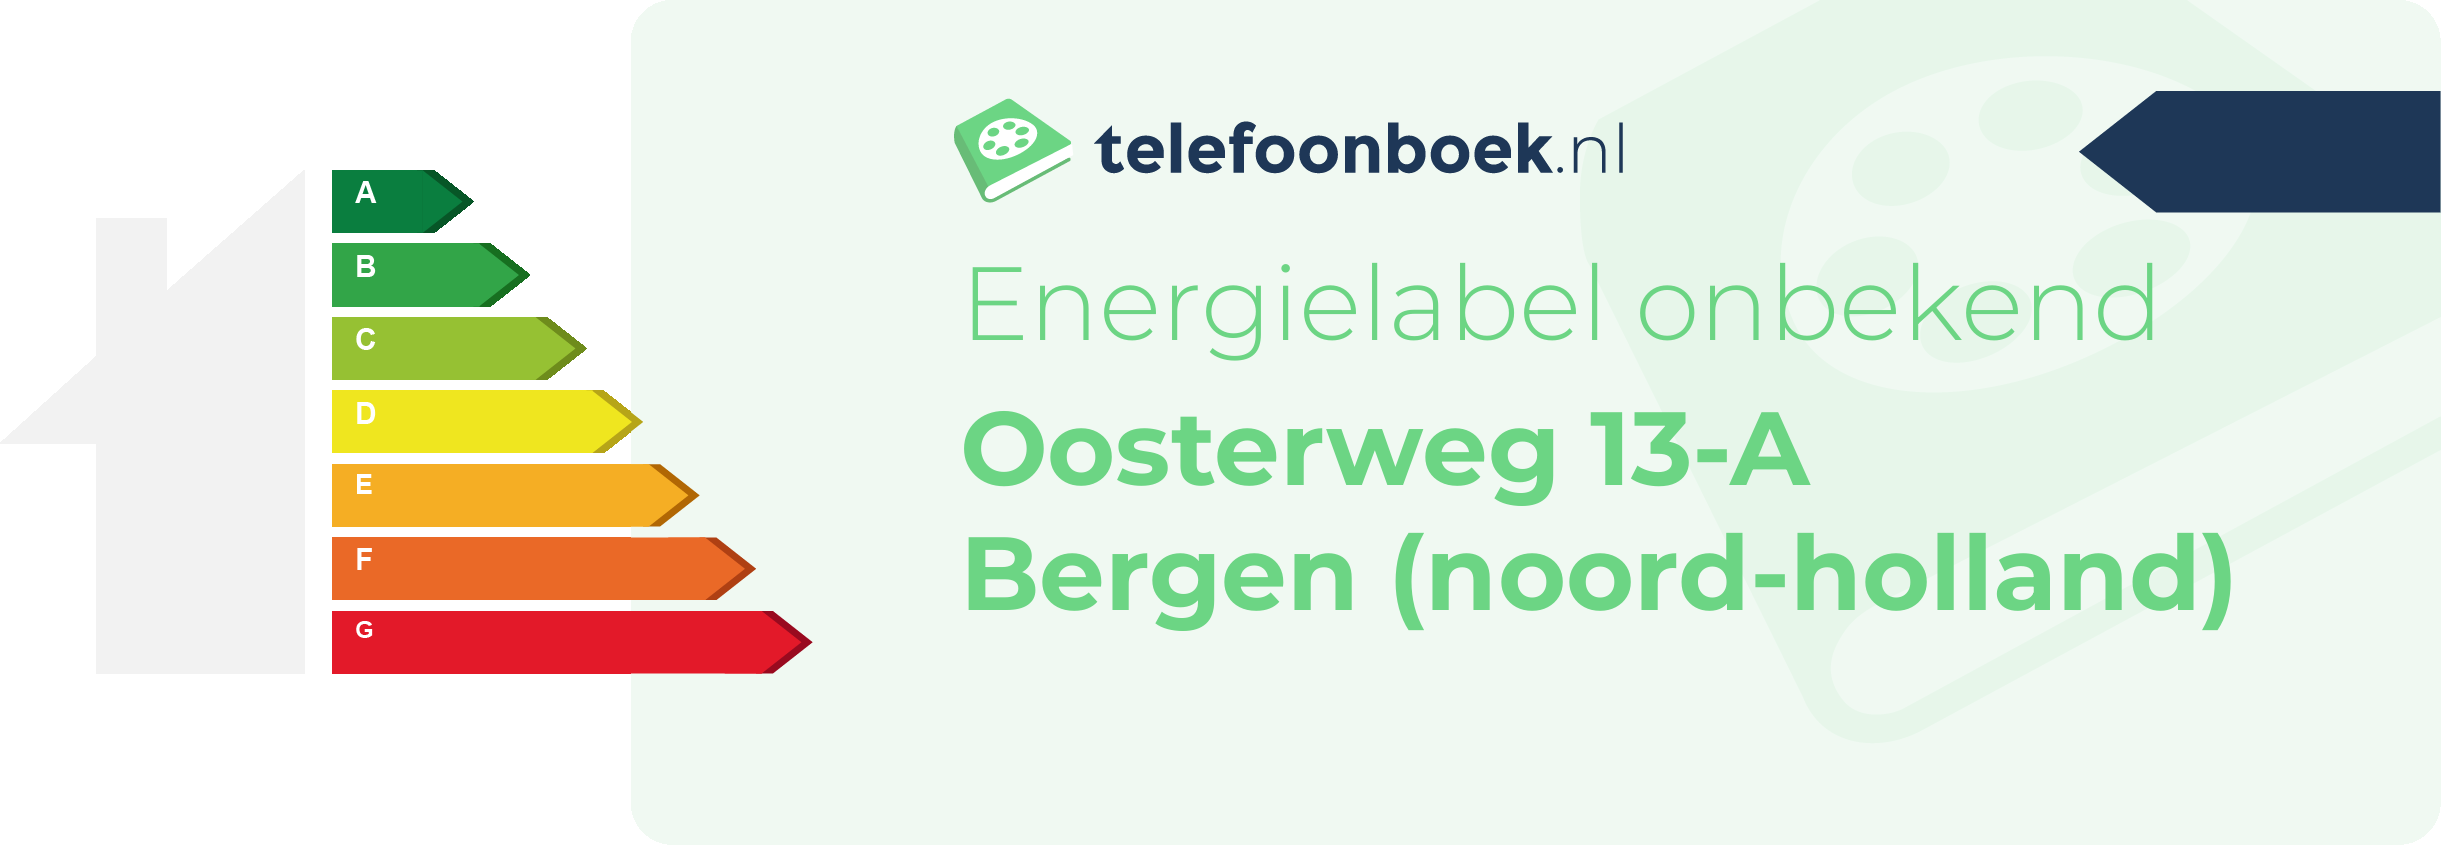 Energielabel Oosterweg 13-A Bergen (Noord-Holland)